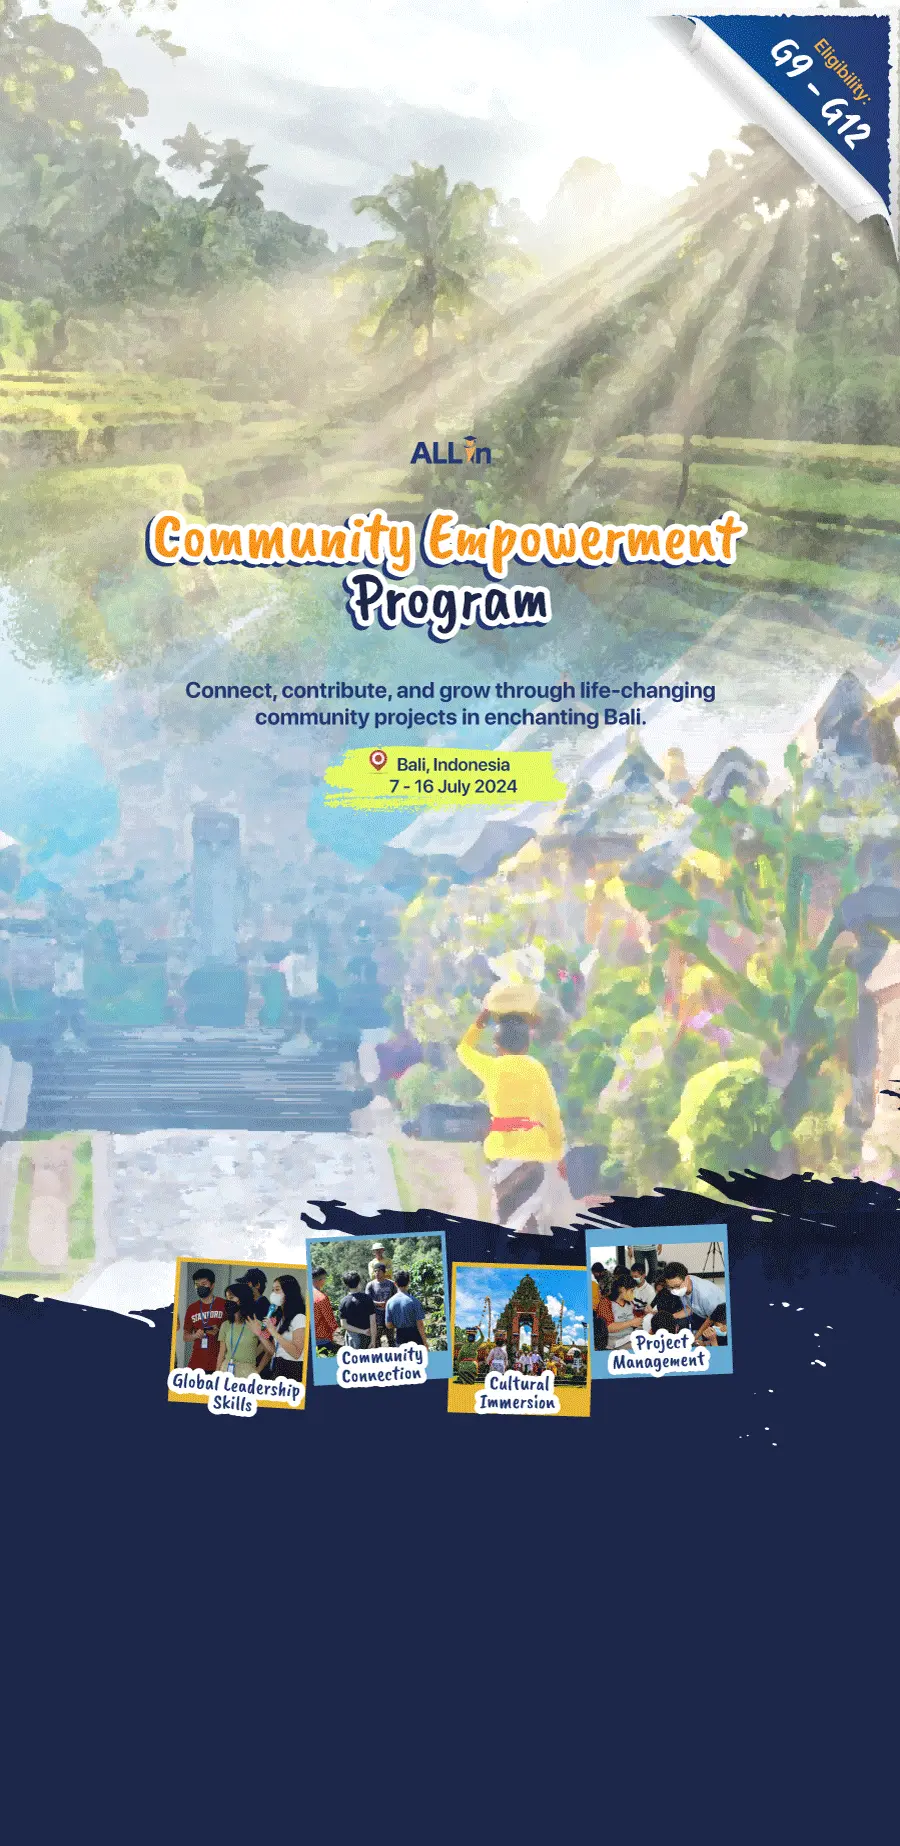 Community empowerment program